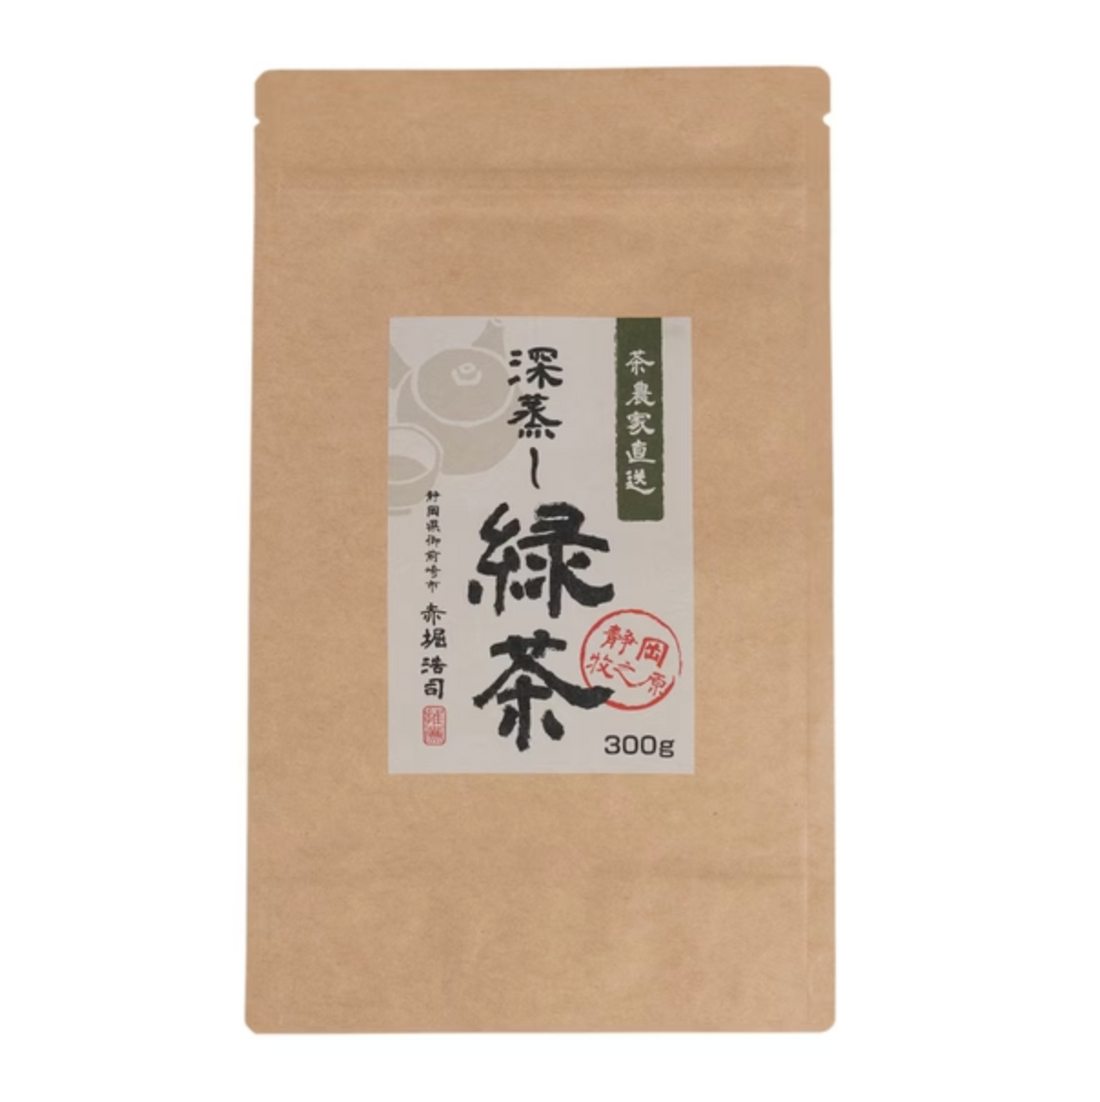 Akahori Shoten tea farmer direct delivery deep steamed green tea 300g